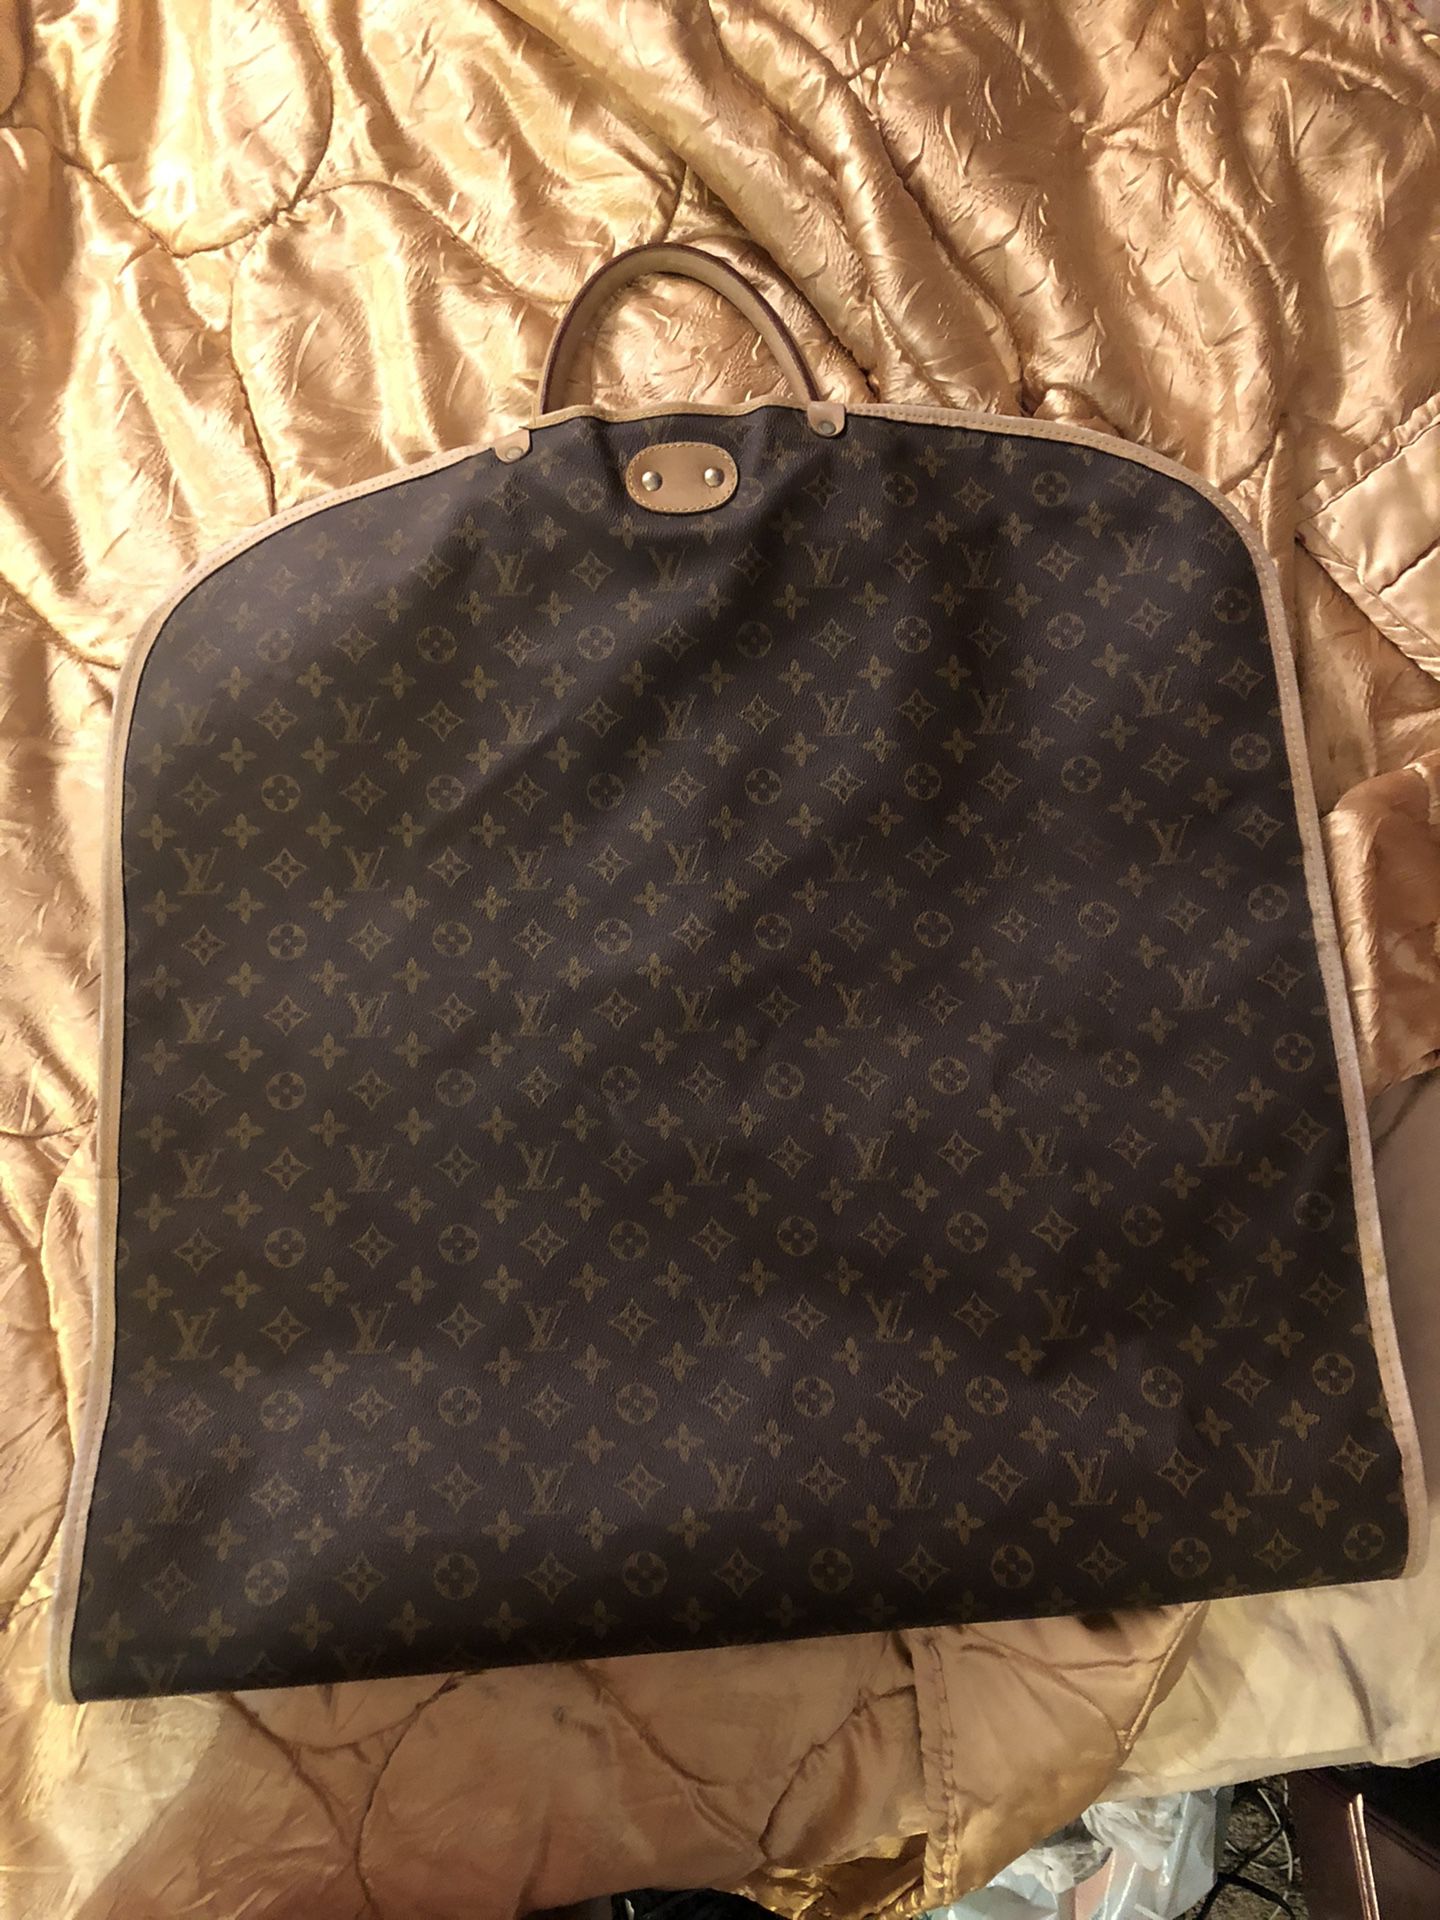 Louis Vuitton garment bag